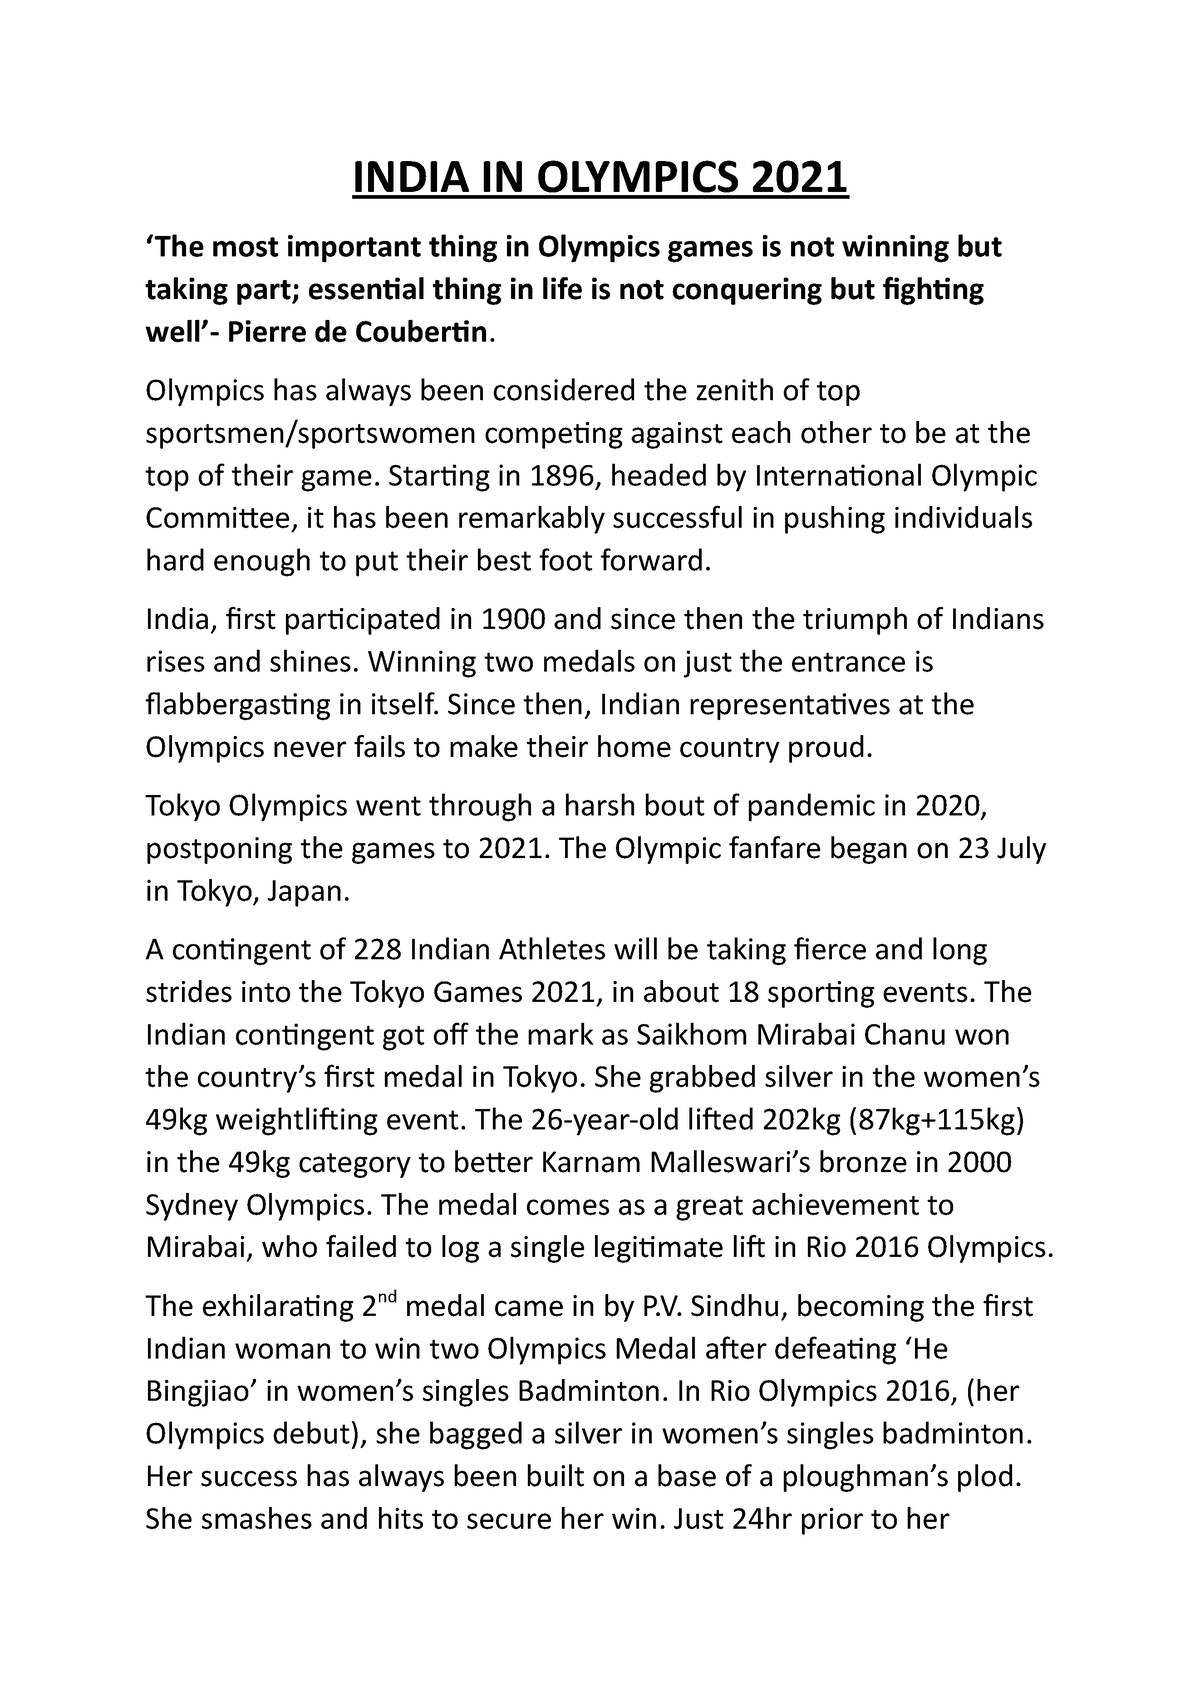 essay on india in olympics 2021